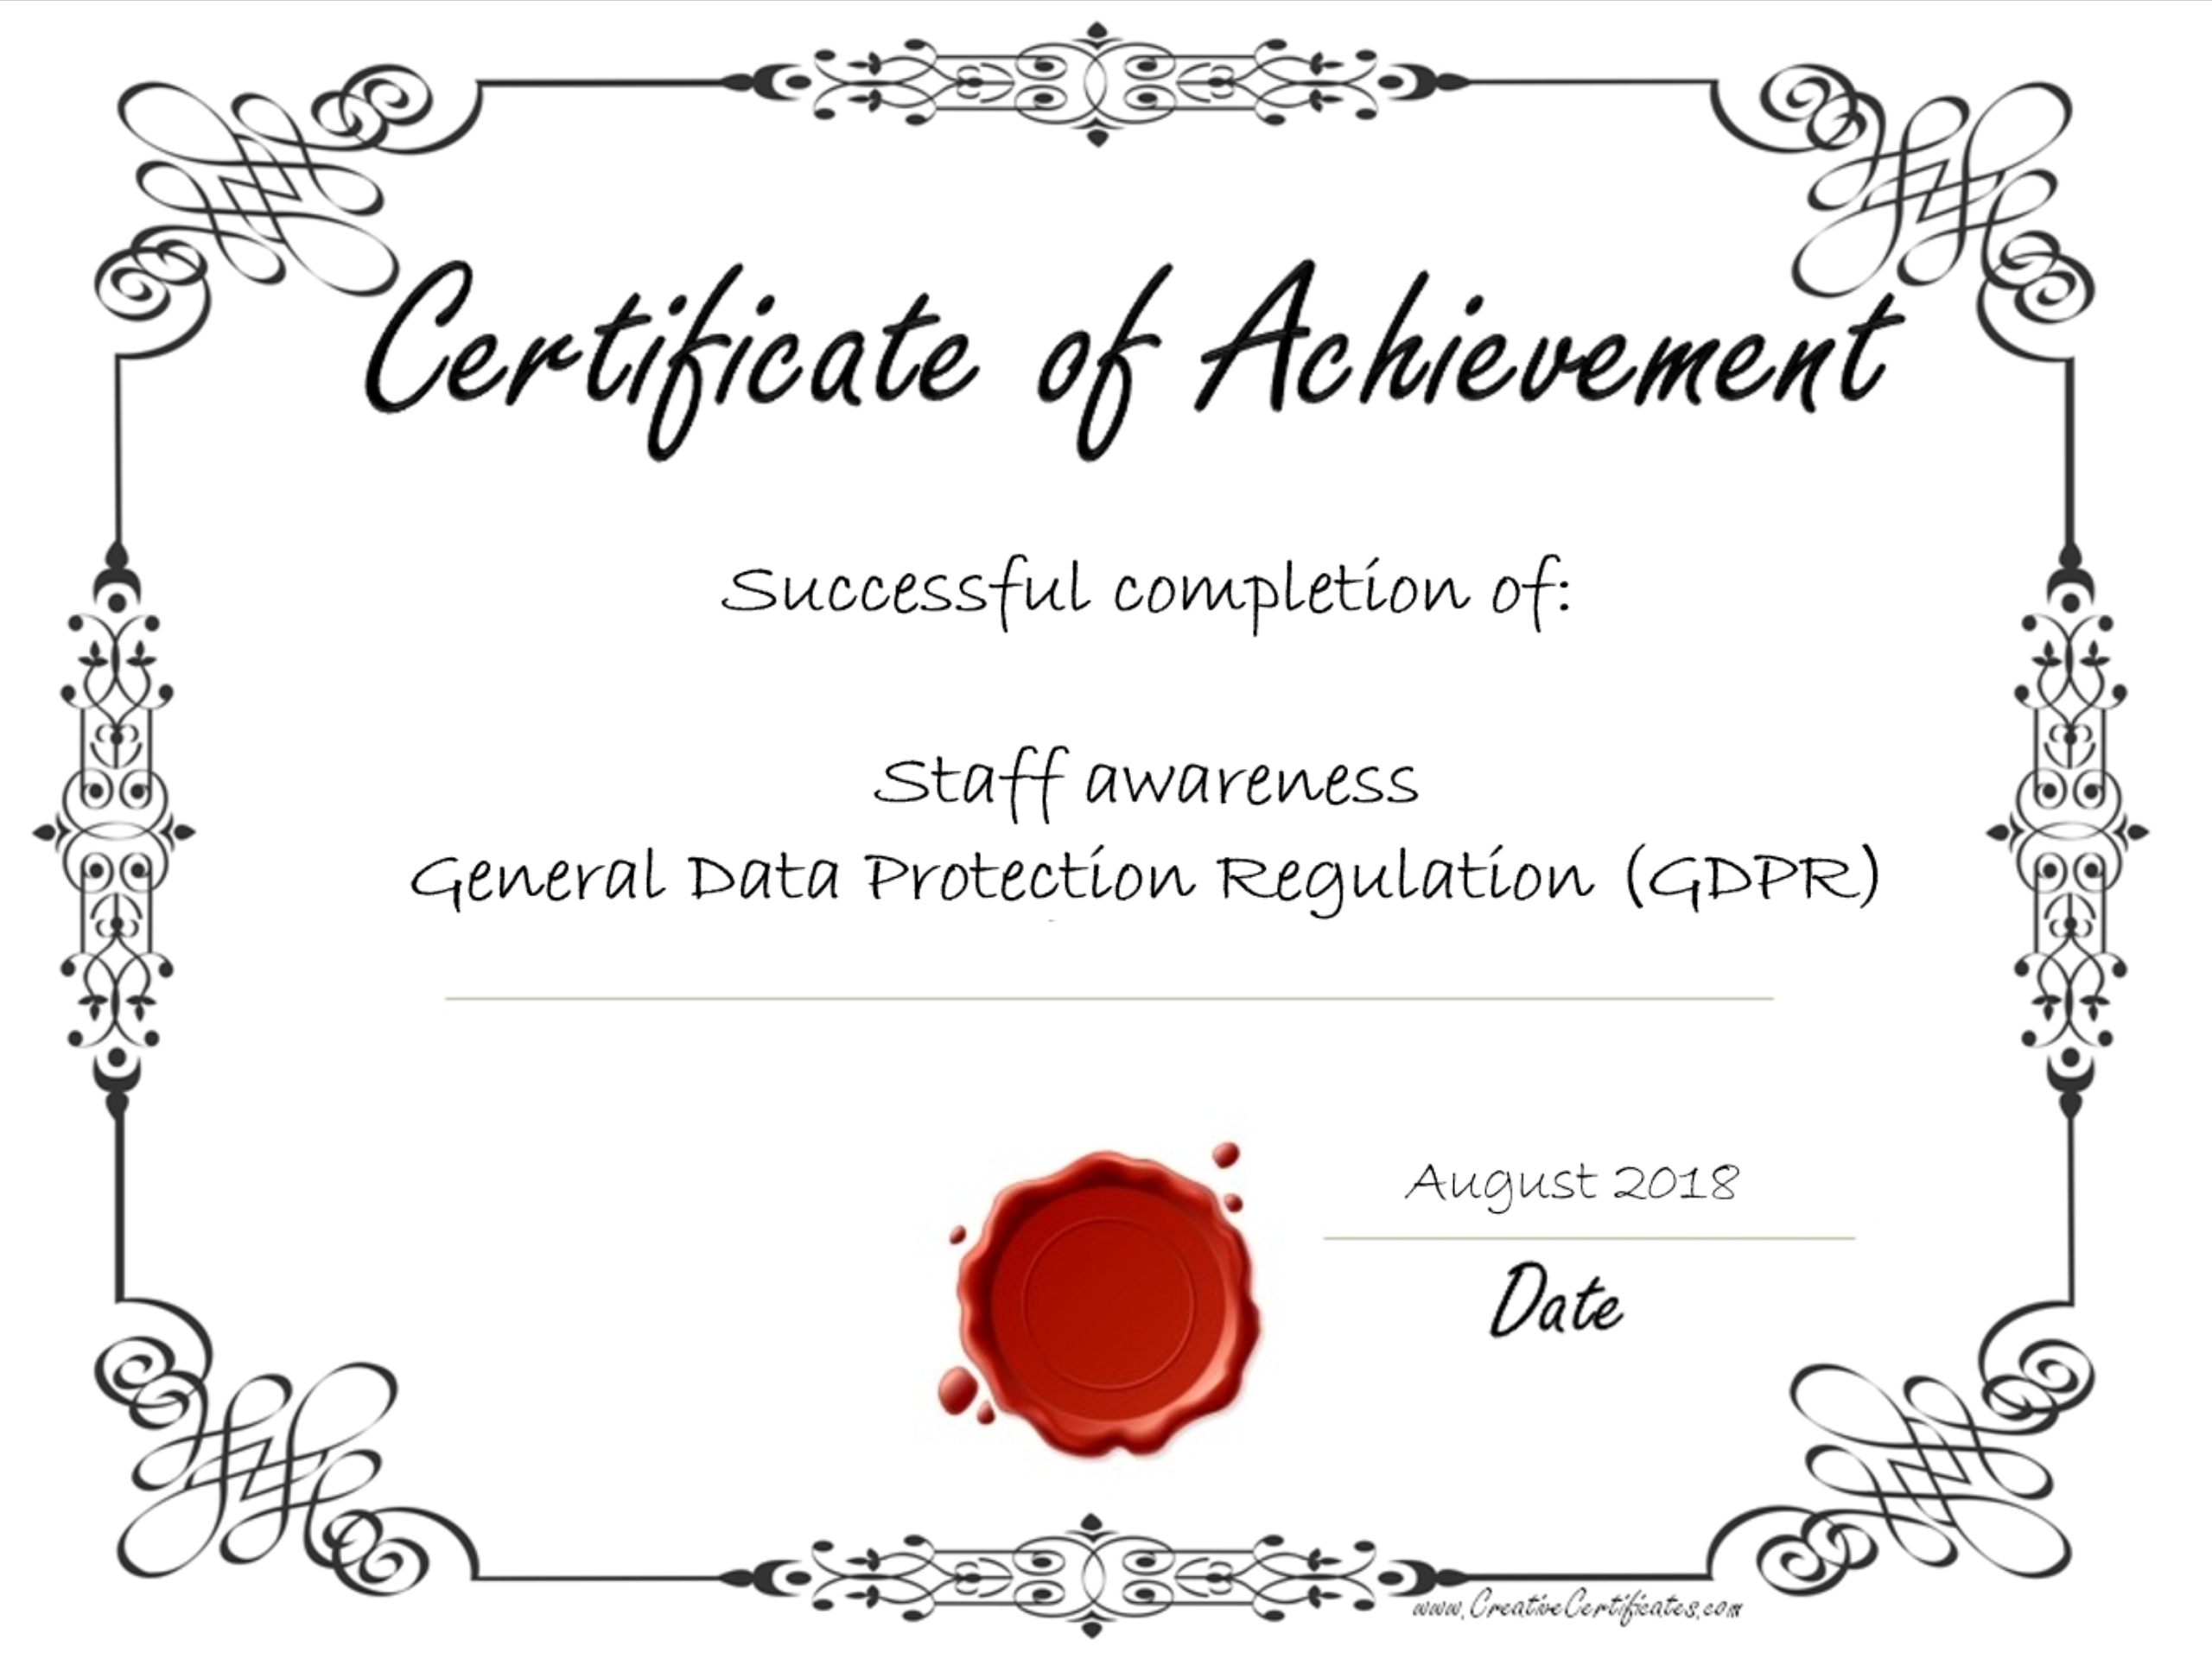 All Chestertons’ staff pass GDPR awareness exam Image